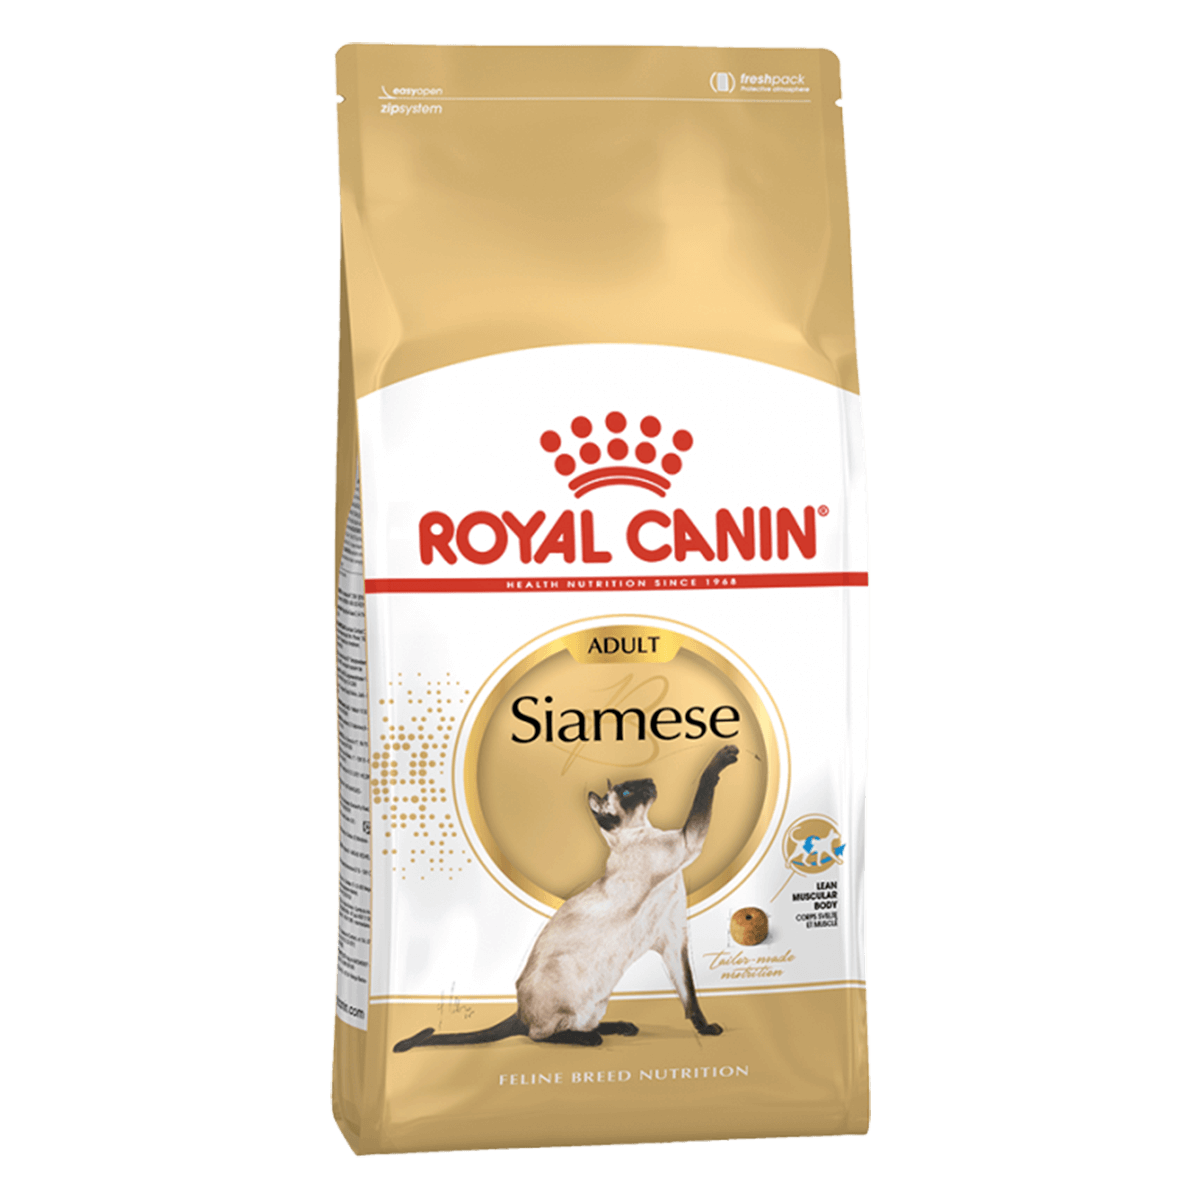 Royal Canin Siamese, 10 кг - корм Роял Канин для сиамских кошек